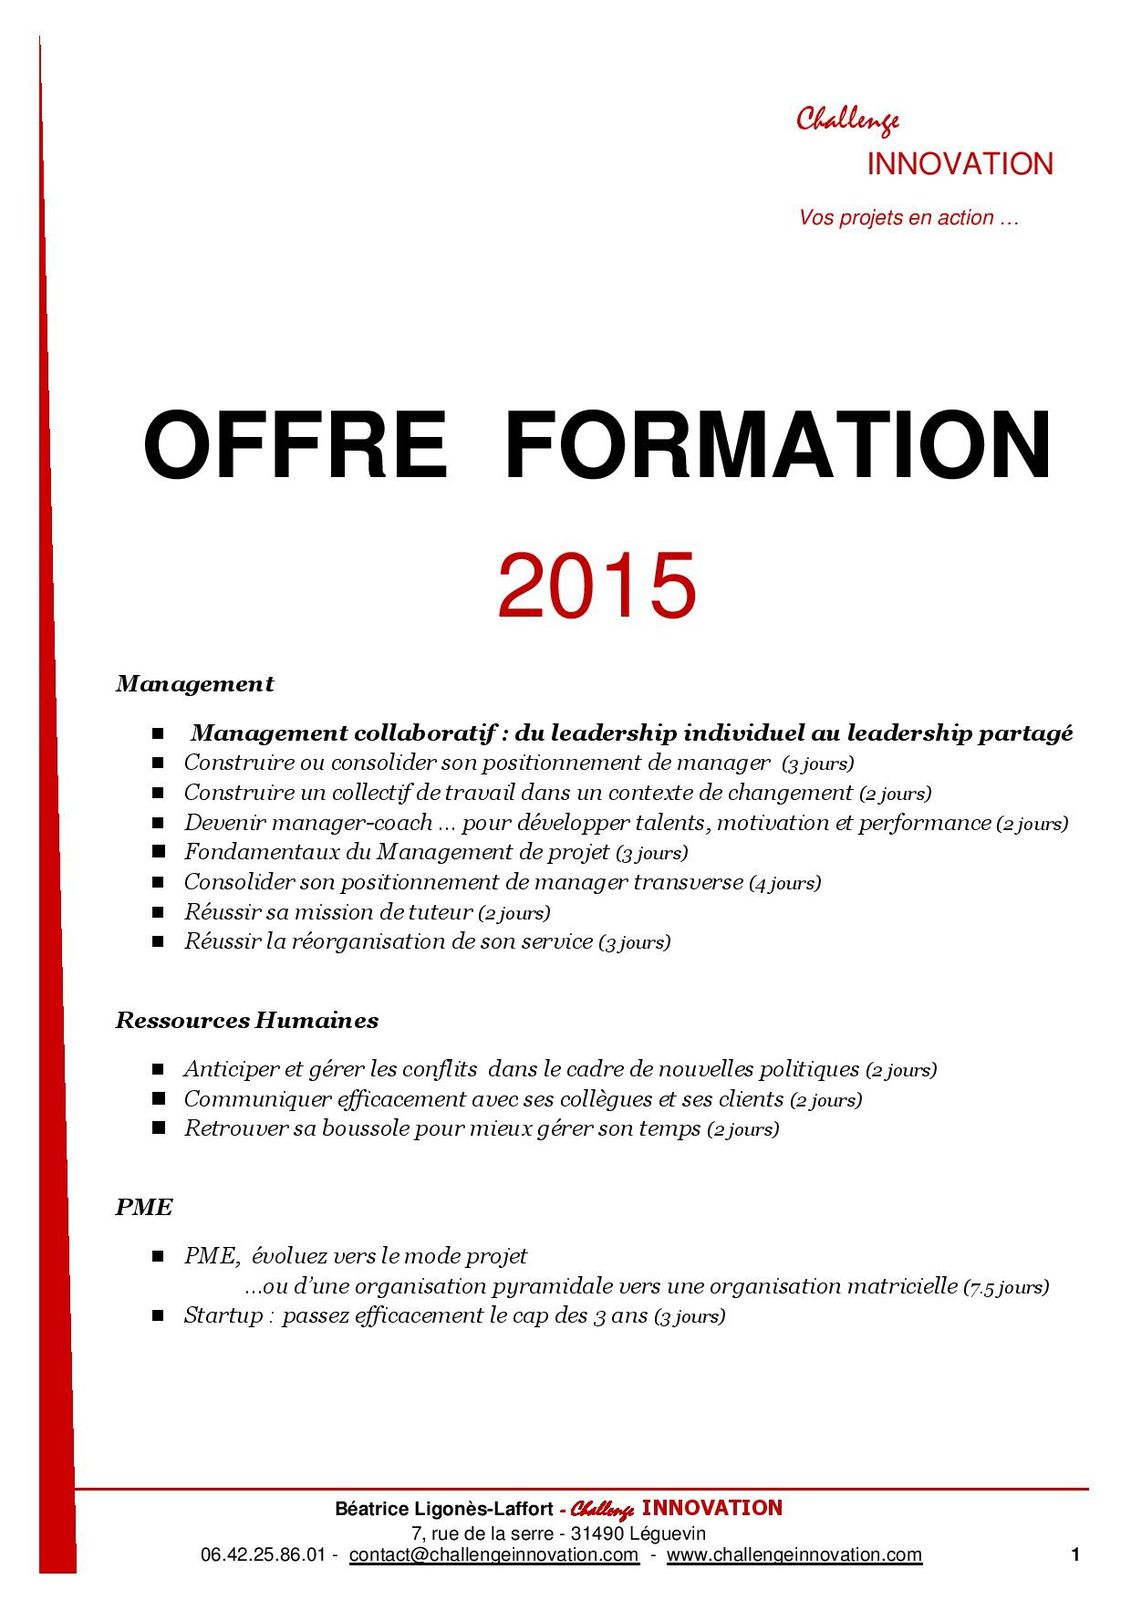 FormationsChallengeInnovation2015liste-page-001